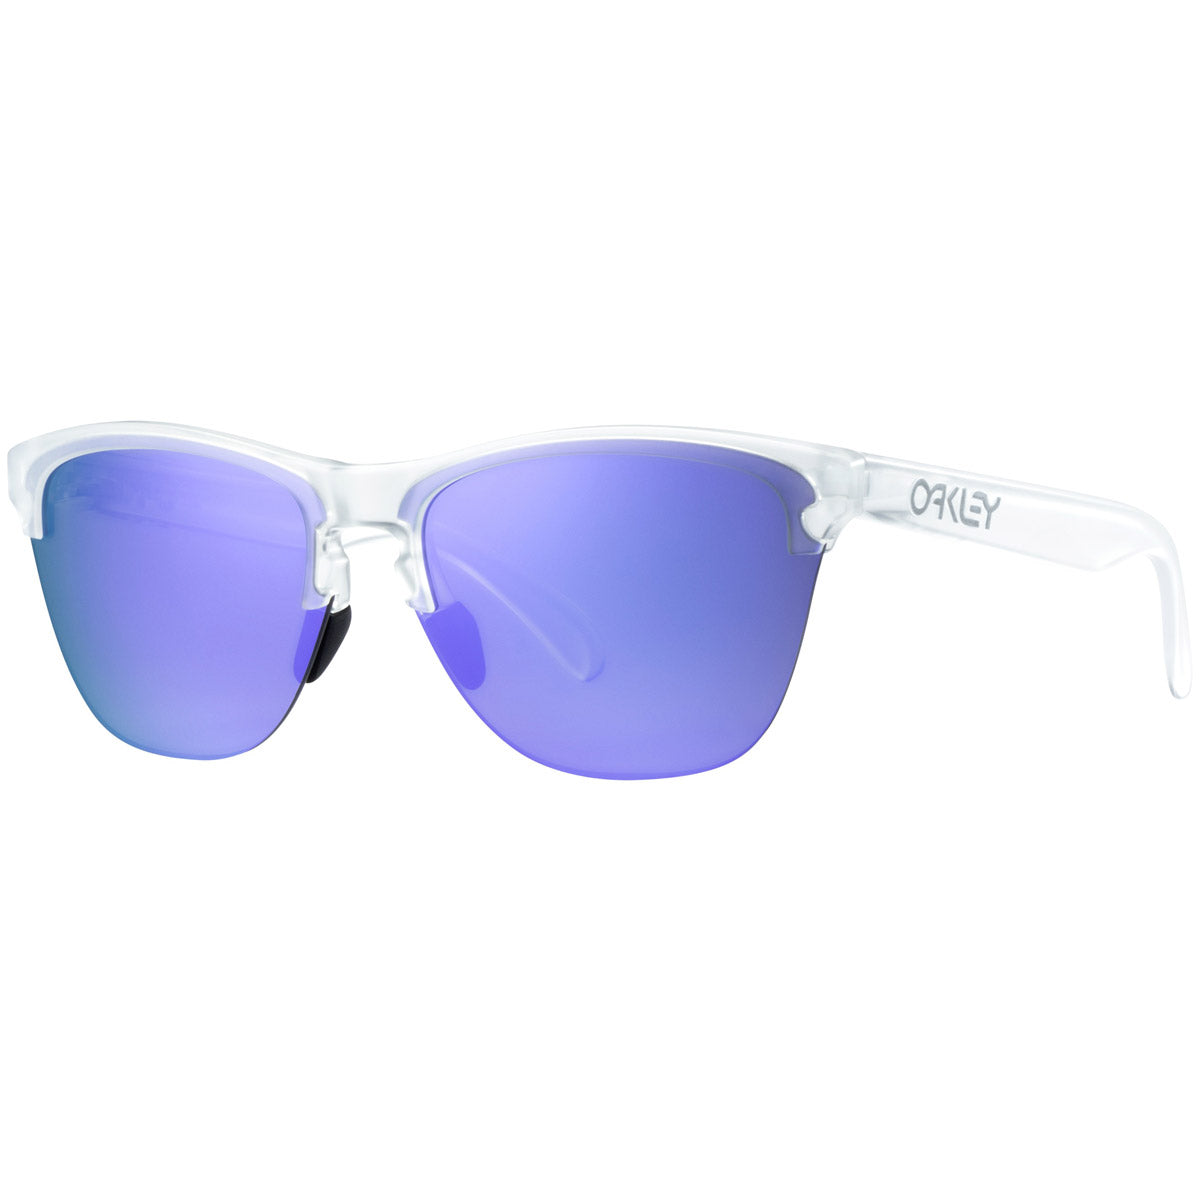 Oakley Frogskins Lite sunglasses - Matte clear Violet iridium | All4cycling